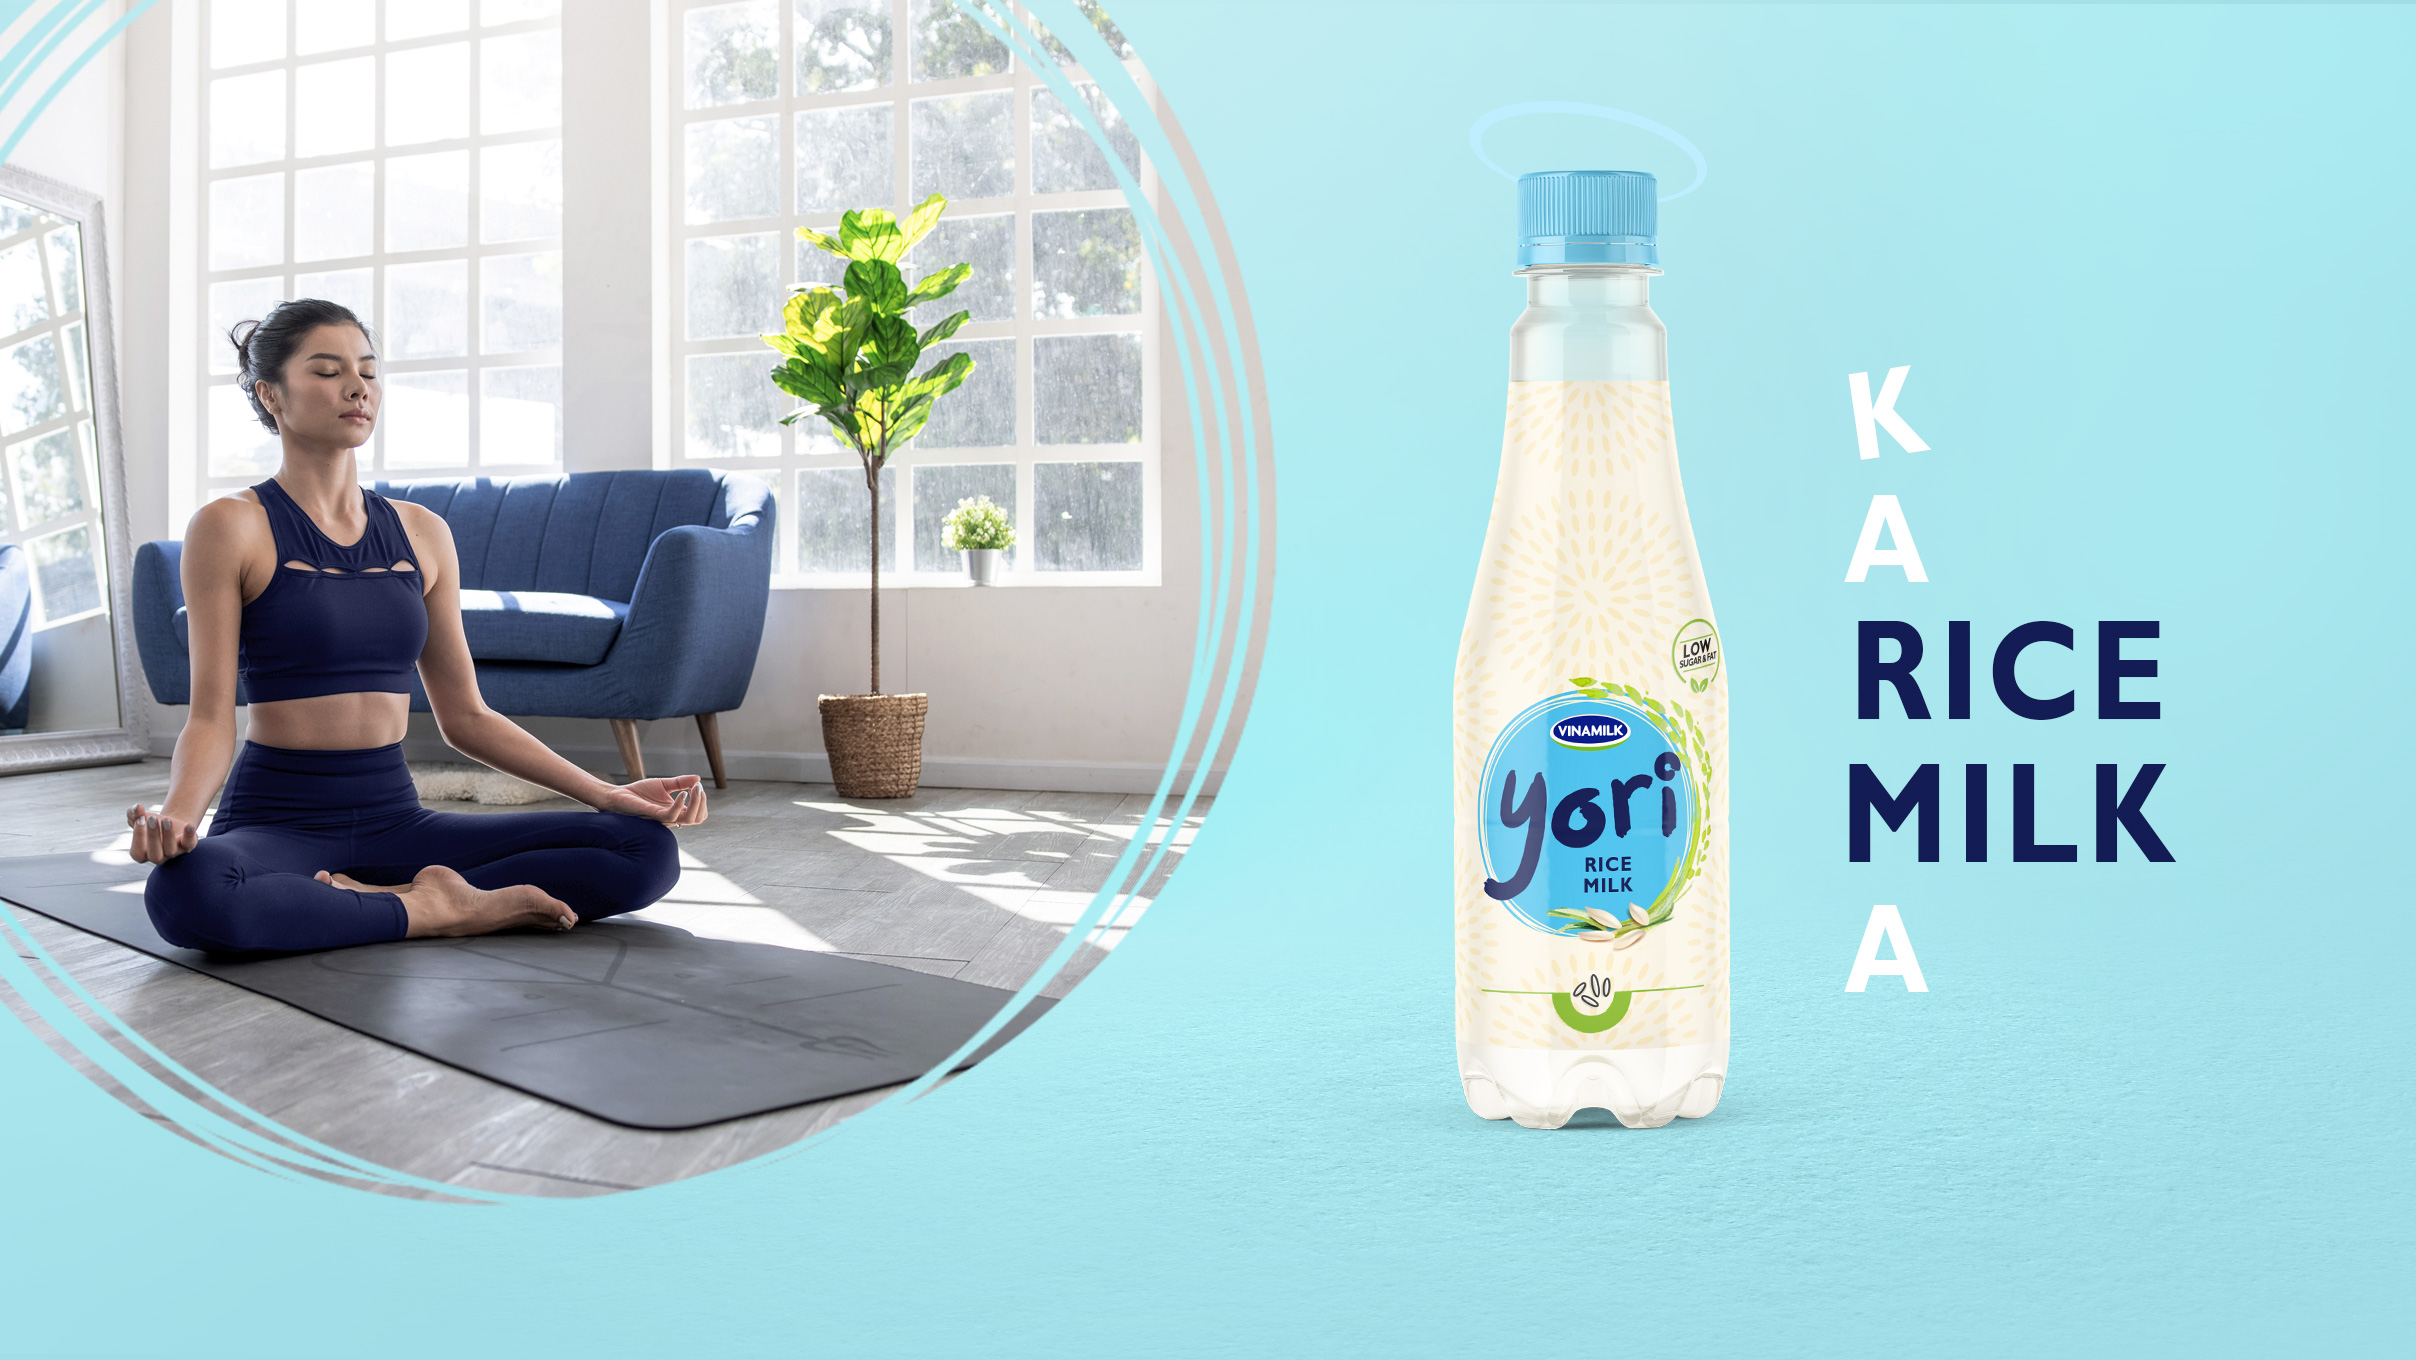 Yori-Packaging-Design-Rice Milk